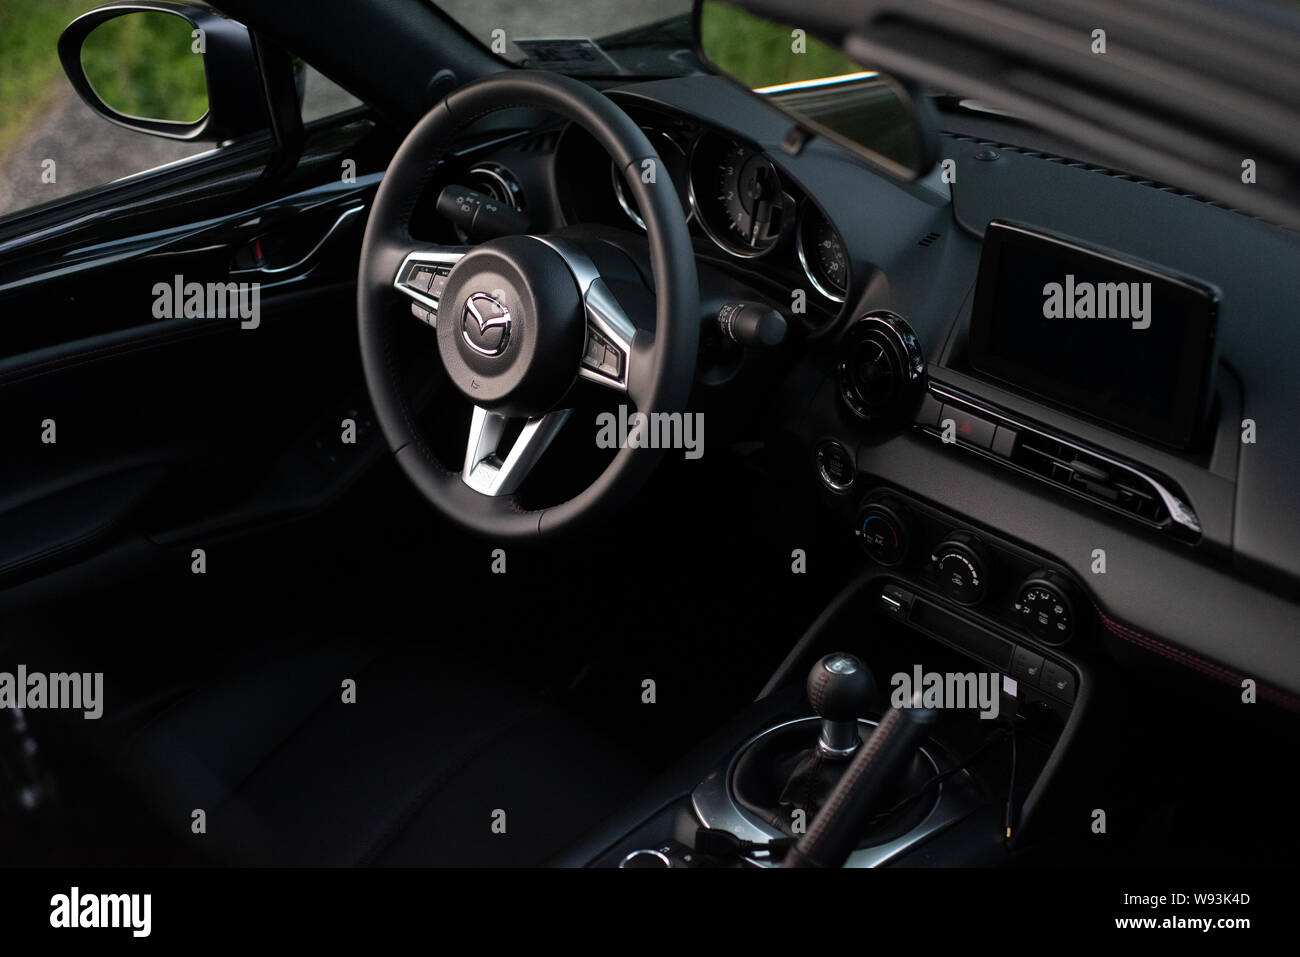 Interior Of Mazda Mx 5 Miata Stock Photo 263768301 Alamy